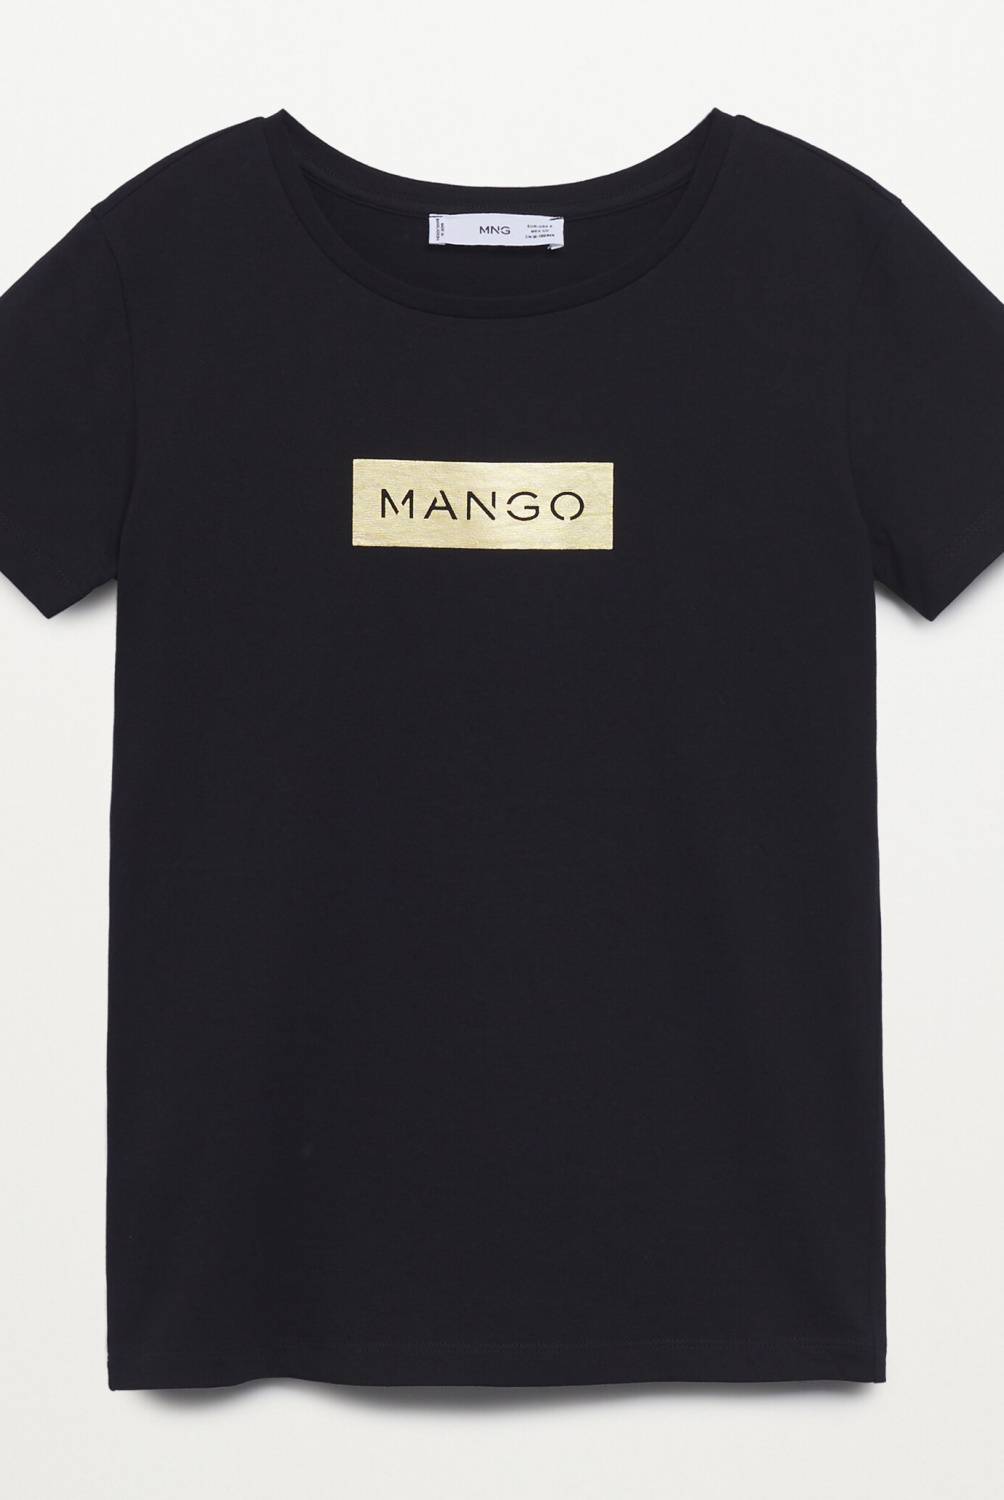 MANGO - Polera Algodón Estampado Logo Pstmango Mujer